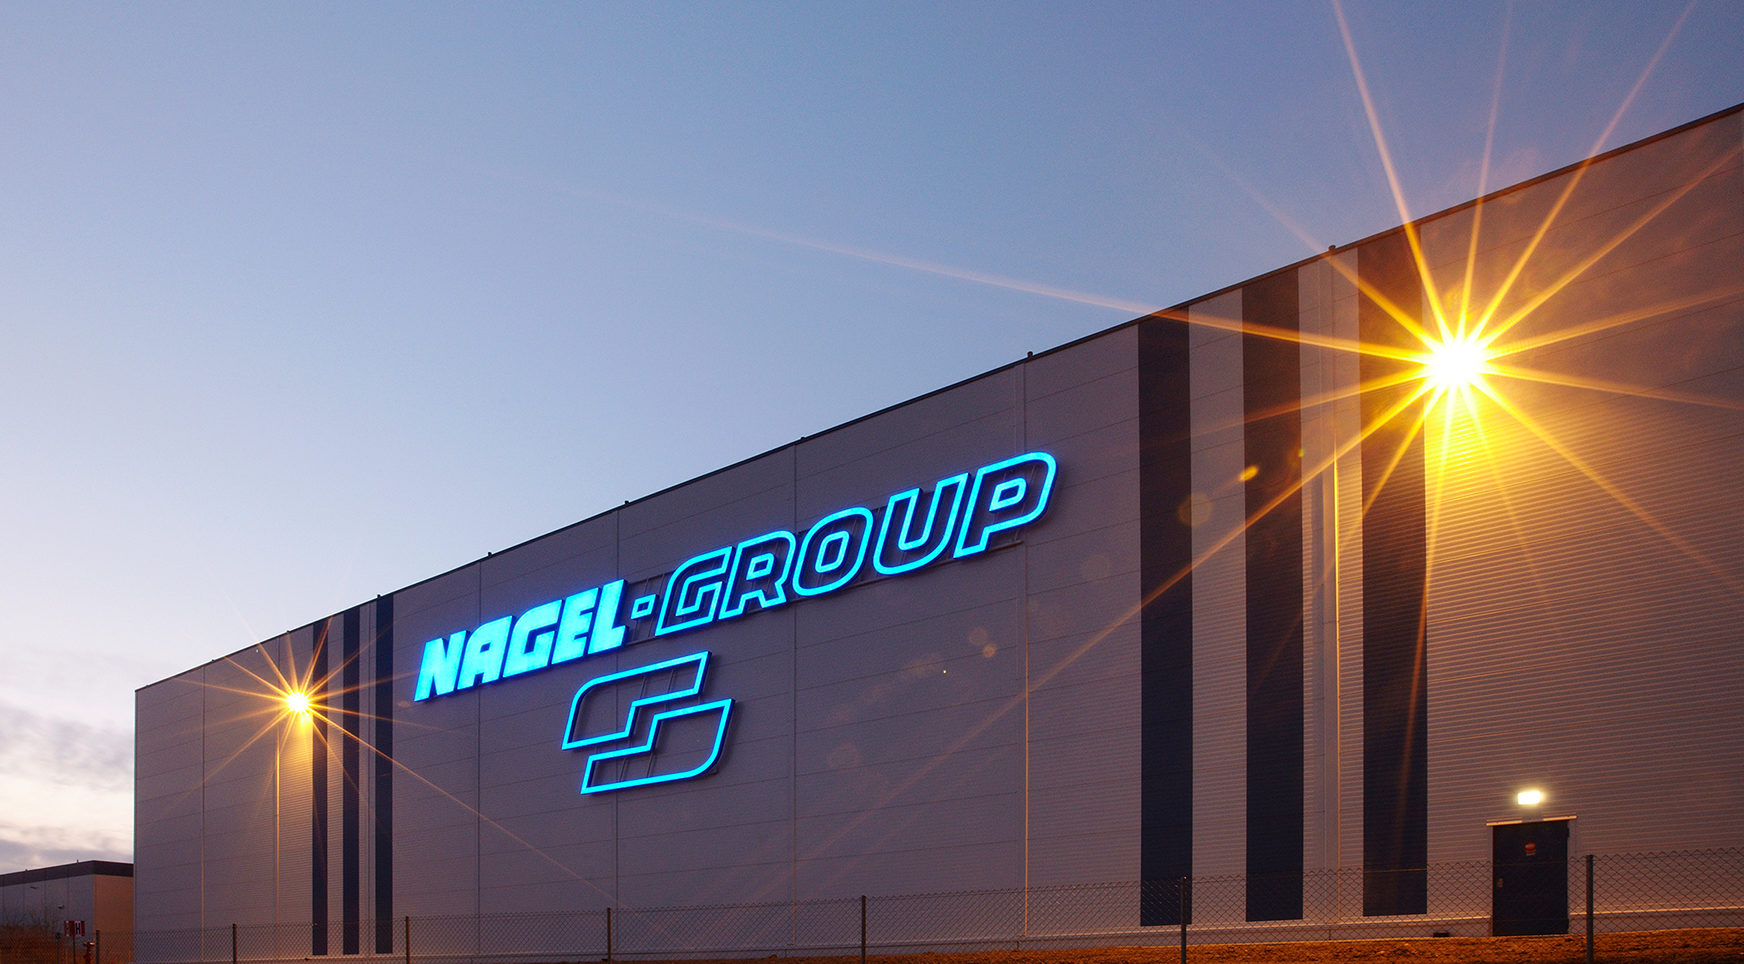 NagelGroup a big player in deepfreeze logistics